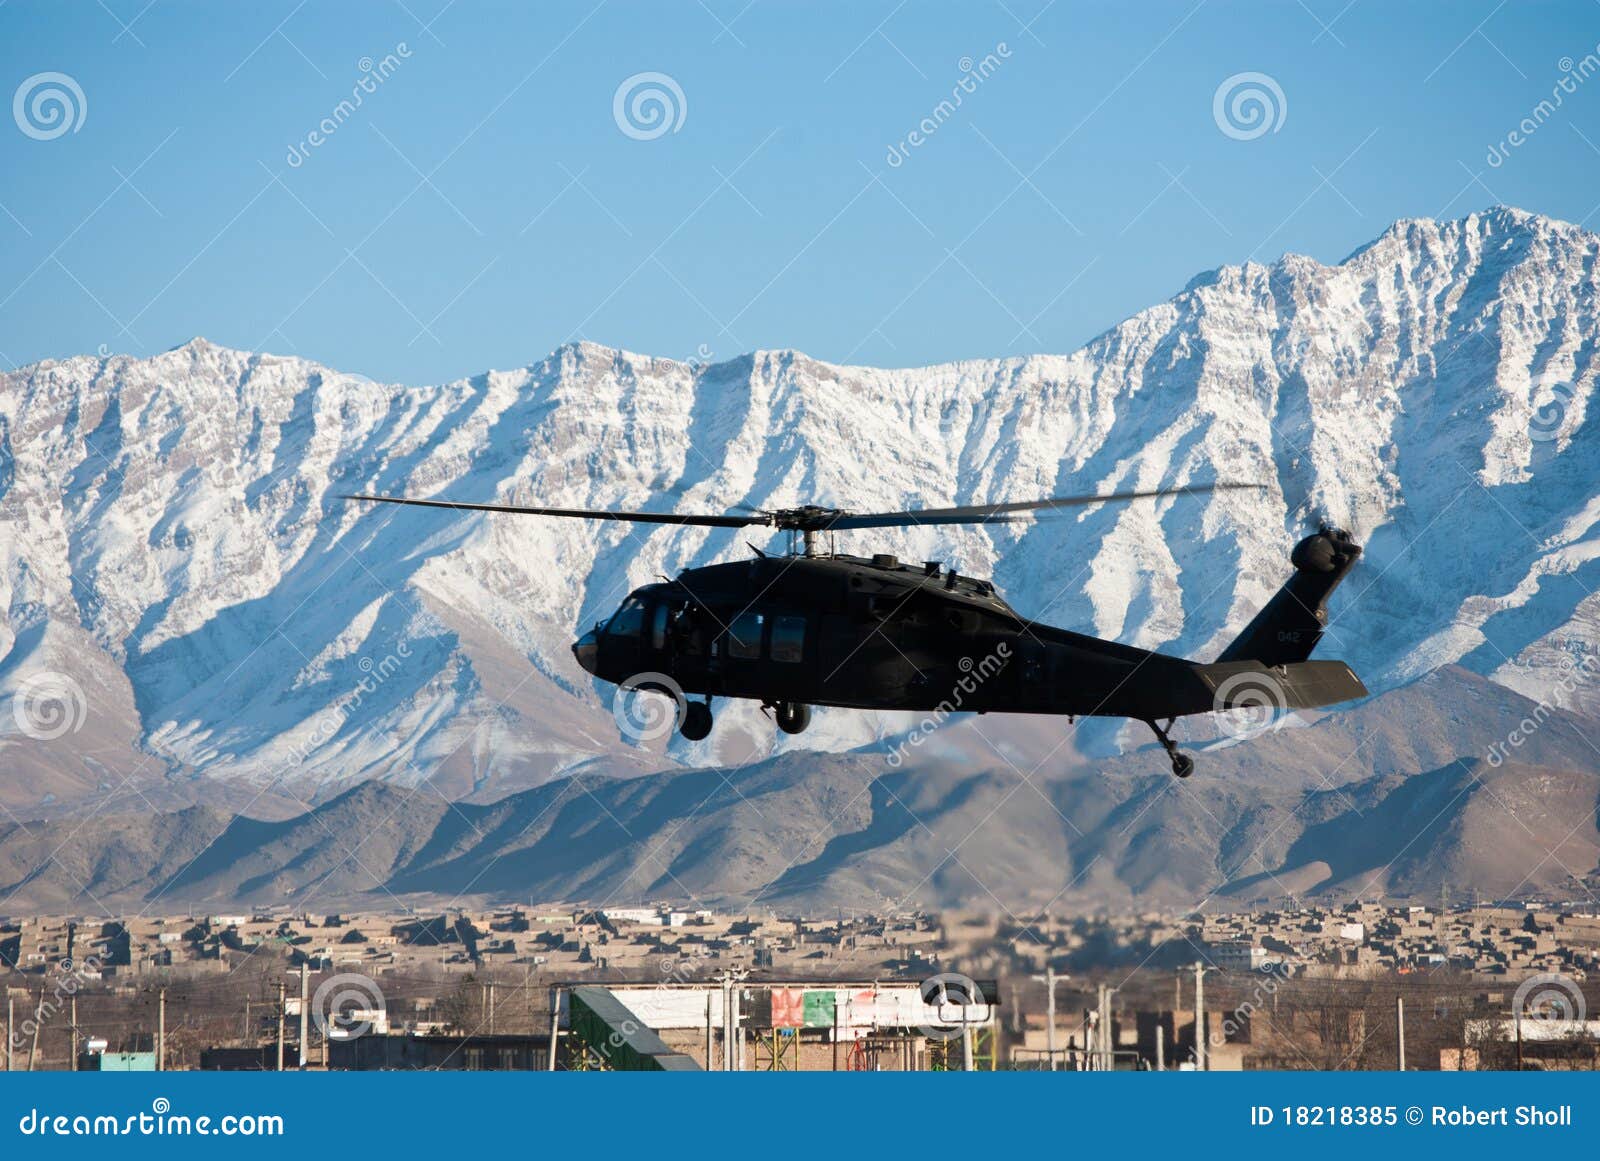 blackhawk landing in kabul